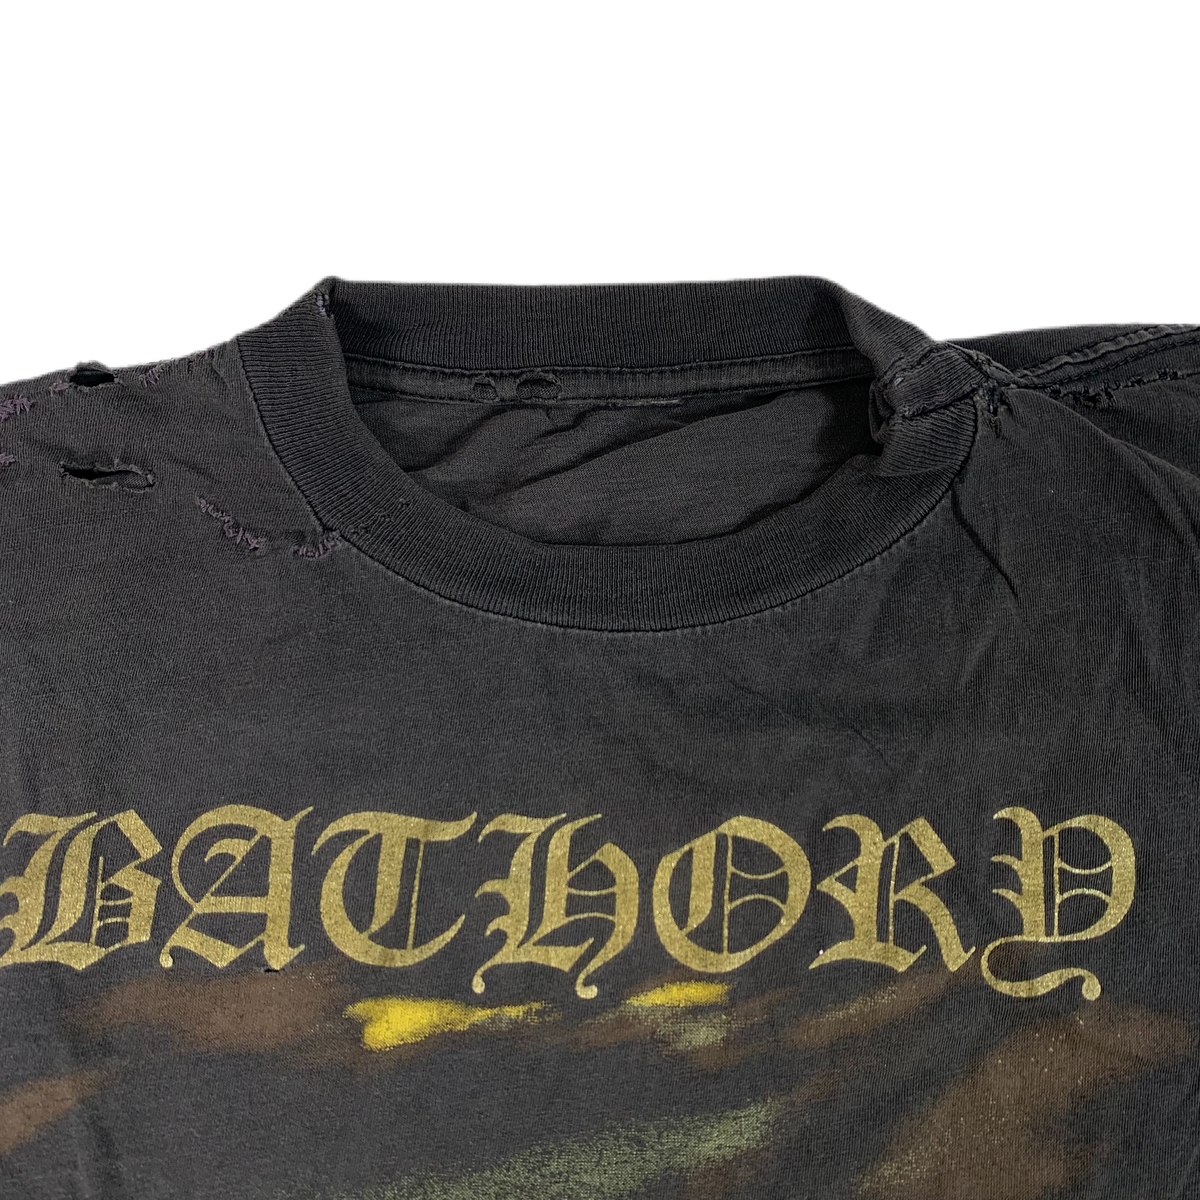 Vintage Bathory “1985” The Return Long Sleeve Shirt